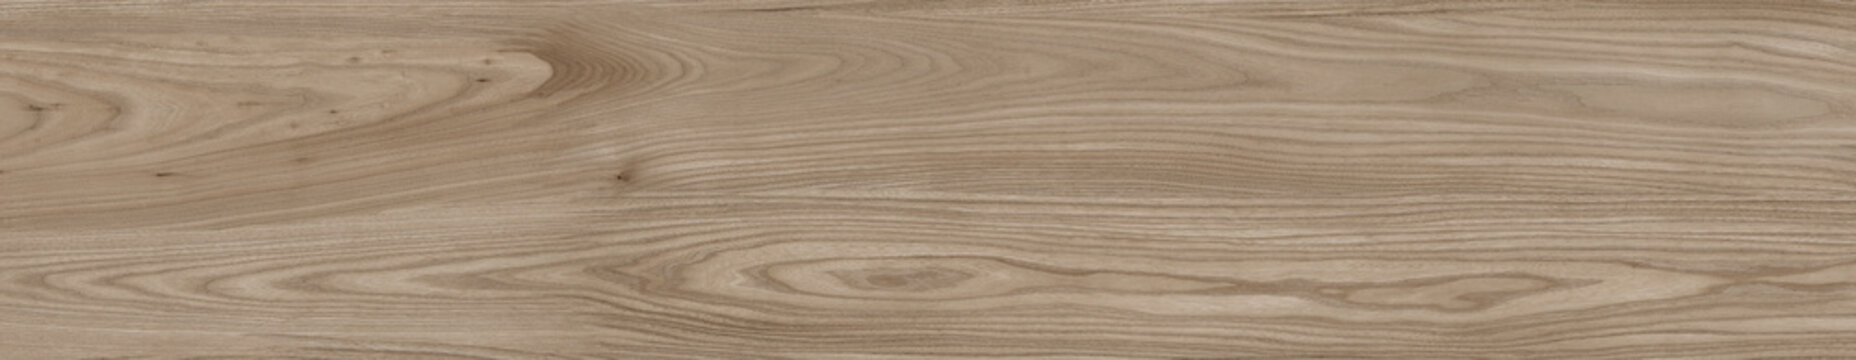 brown wood texture background, wooden floor tiles random 2, vitrified and porcelain wooden strip design for interior and exterior flooring, pine oak teak walnut timber  